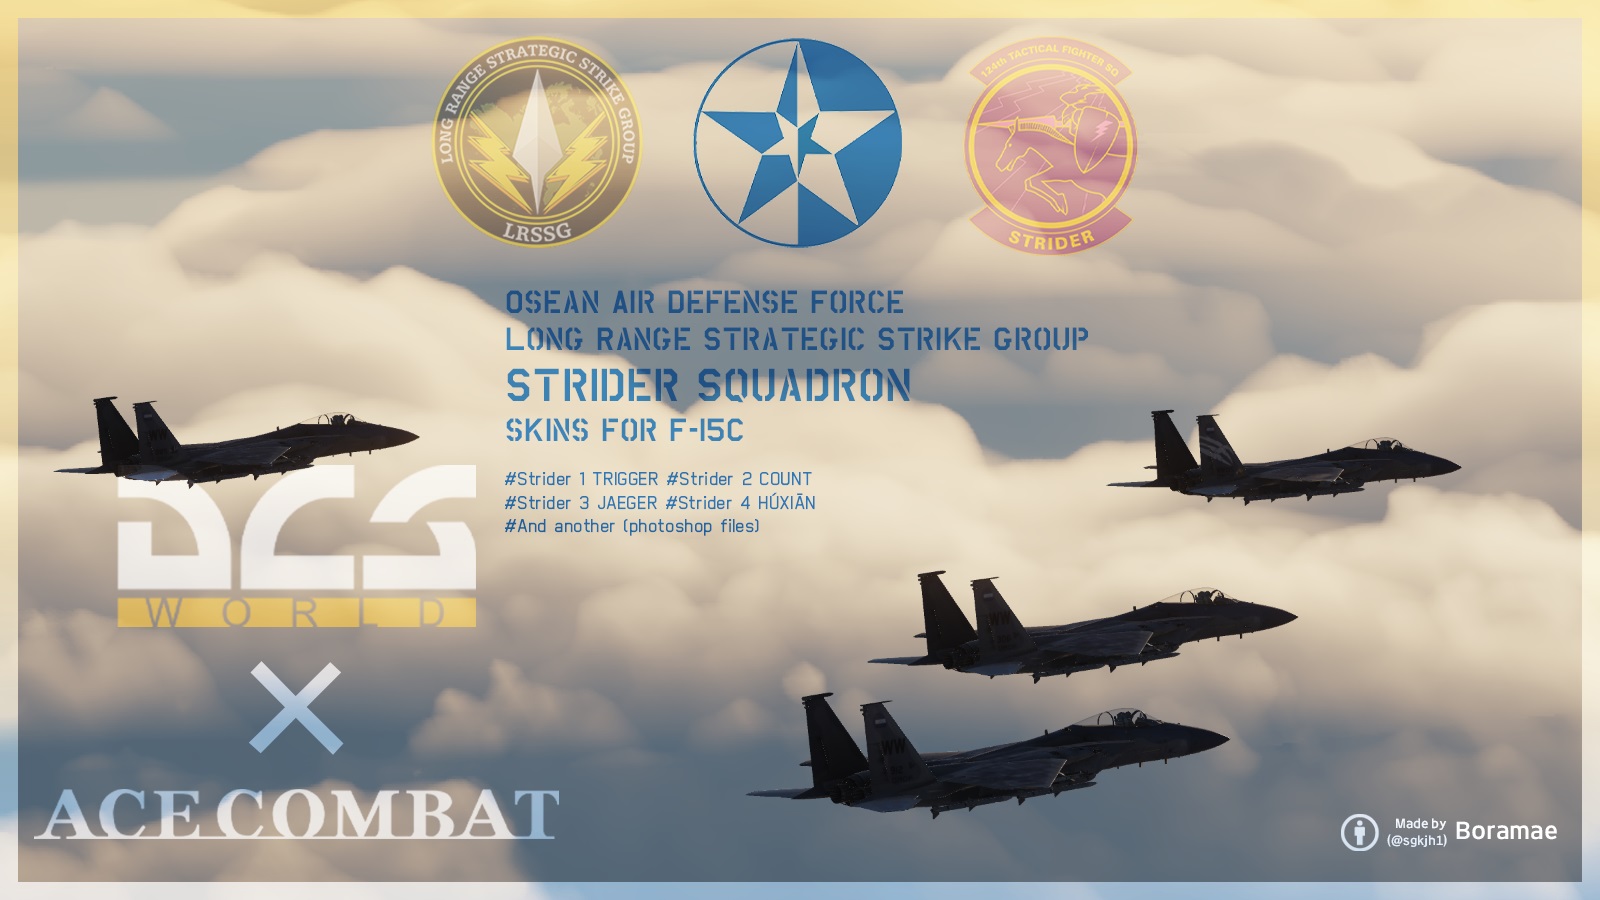 Ace Combat - Strider Squadron Skins for F-15C